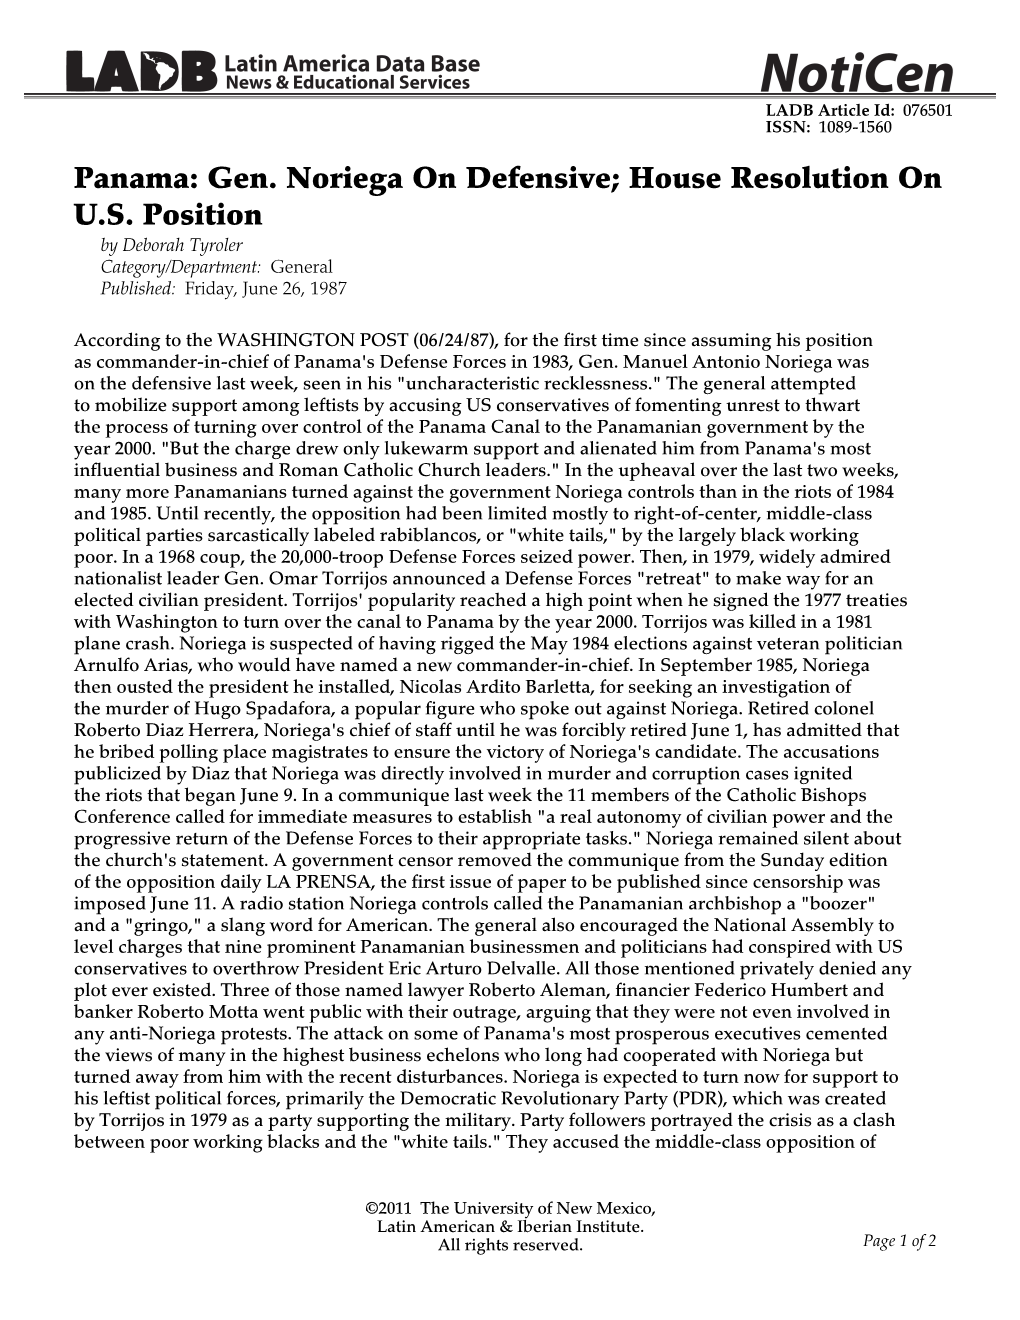 Panama: Gen. Noriega on Defensive; House Resolution on U.S